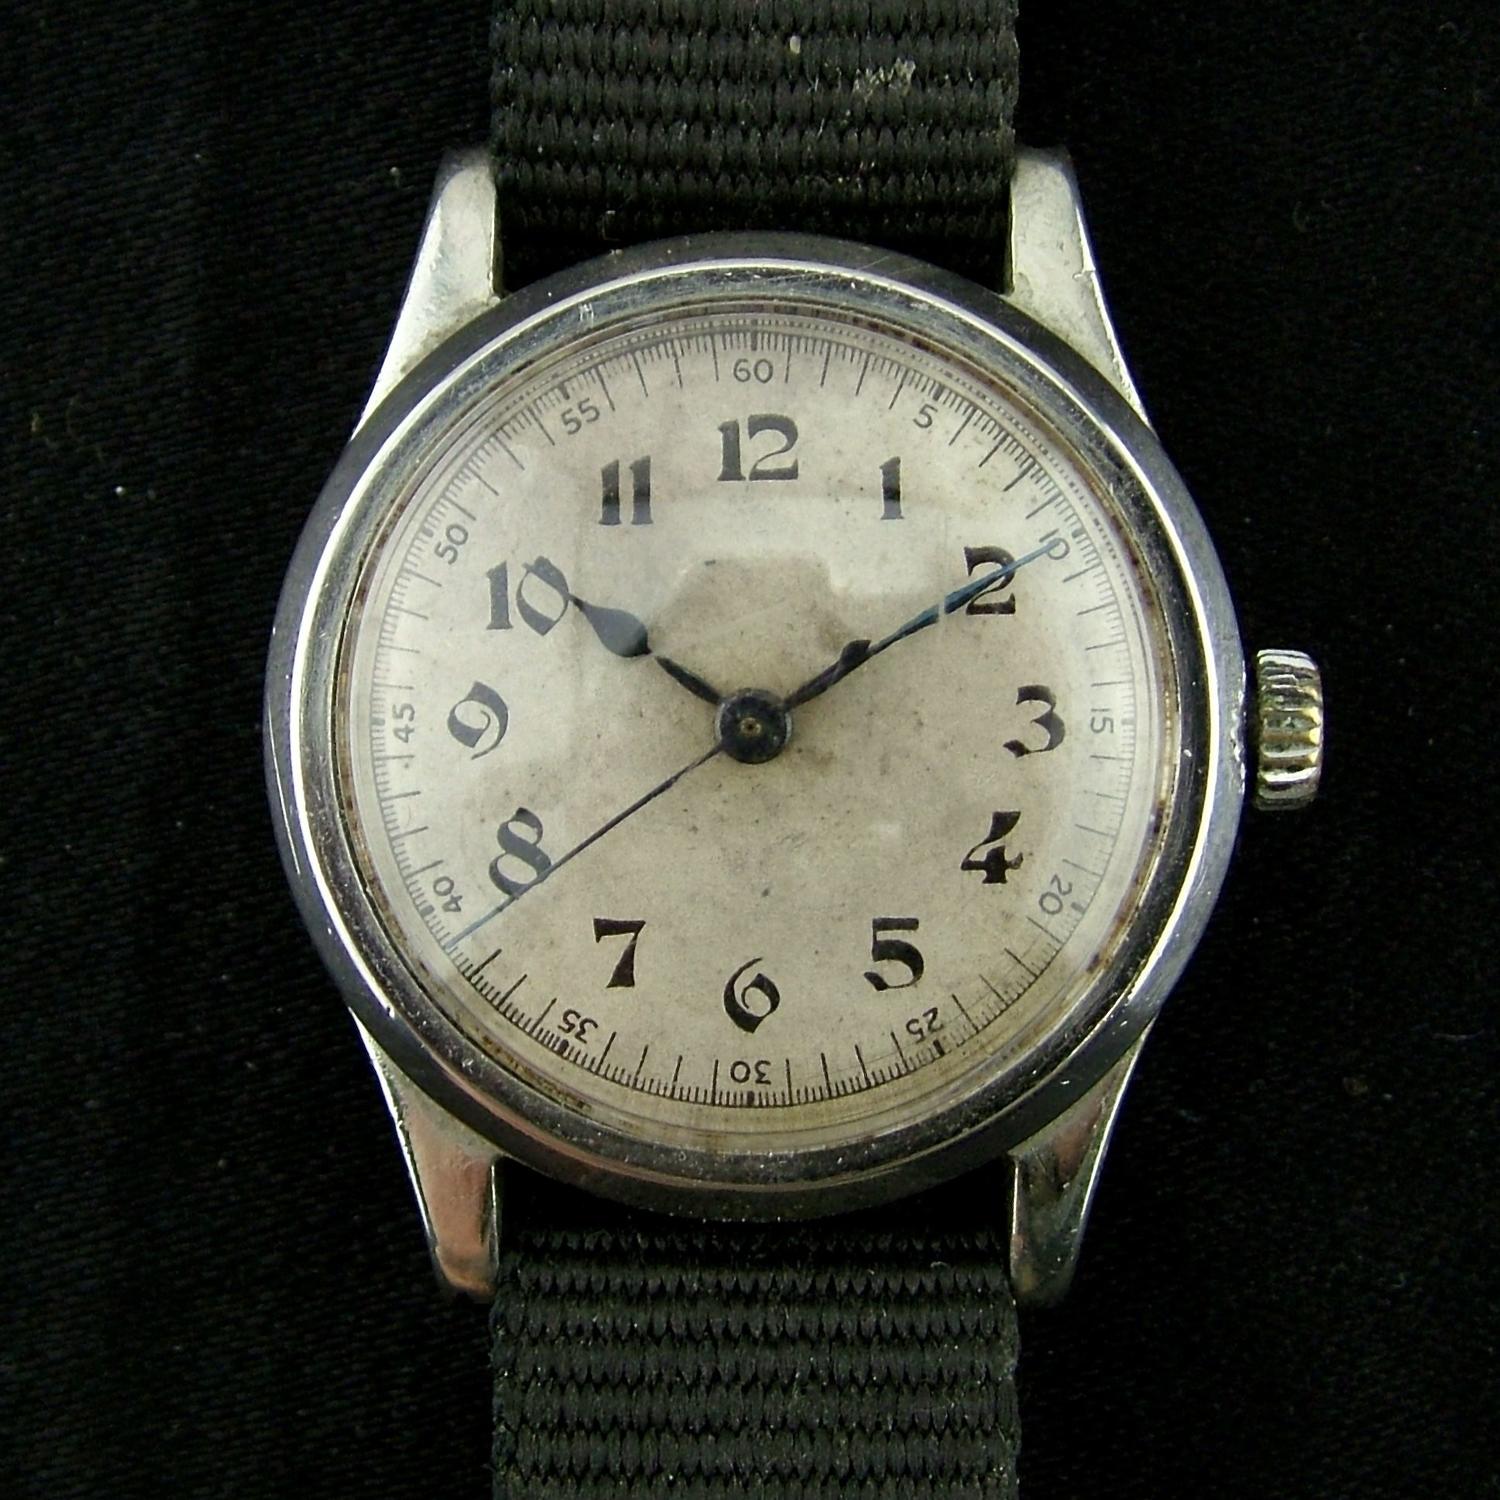 Air Ministry pilot's wristwatch